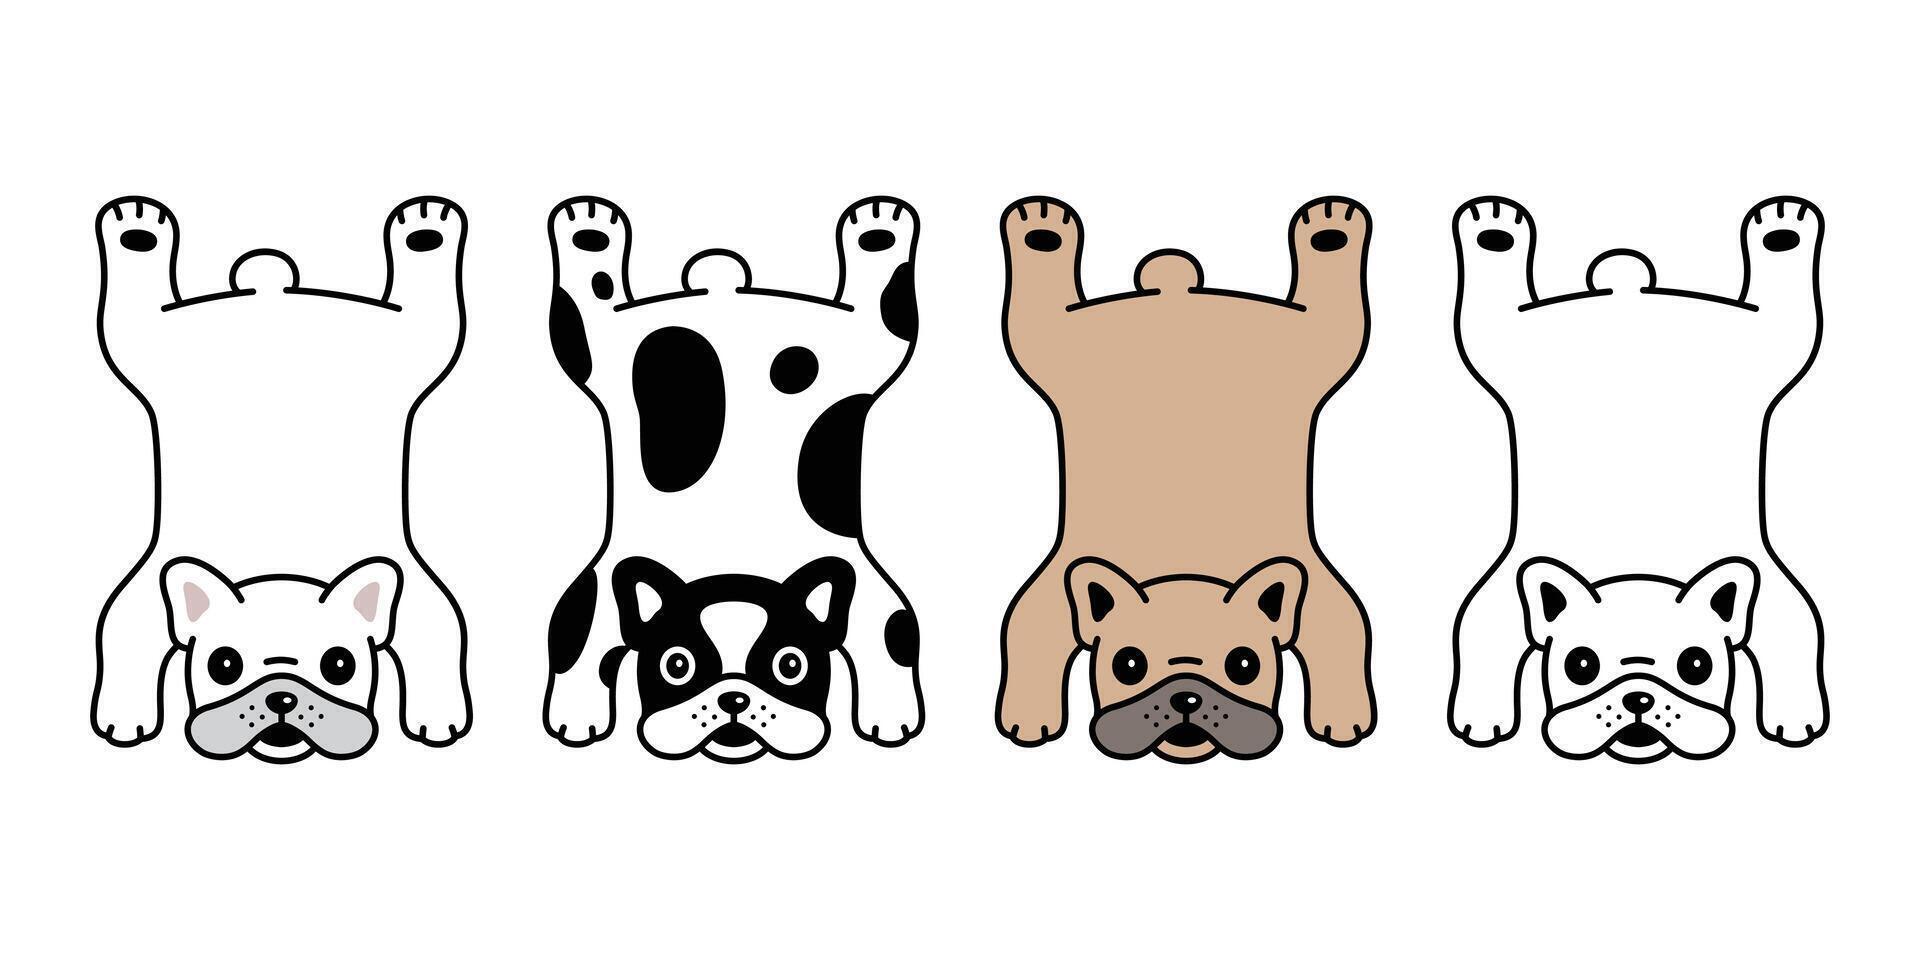 dog french bulldog icon rug carpet puppy pet character cartoon symbol scarf illustration doodle design vector